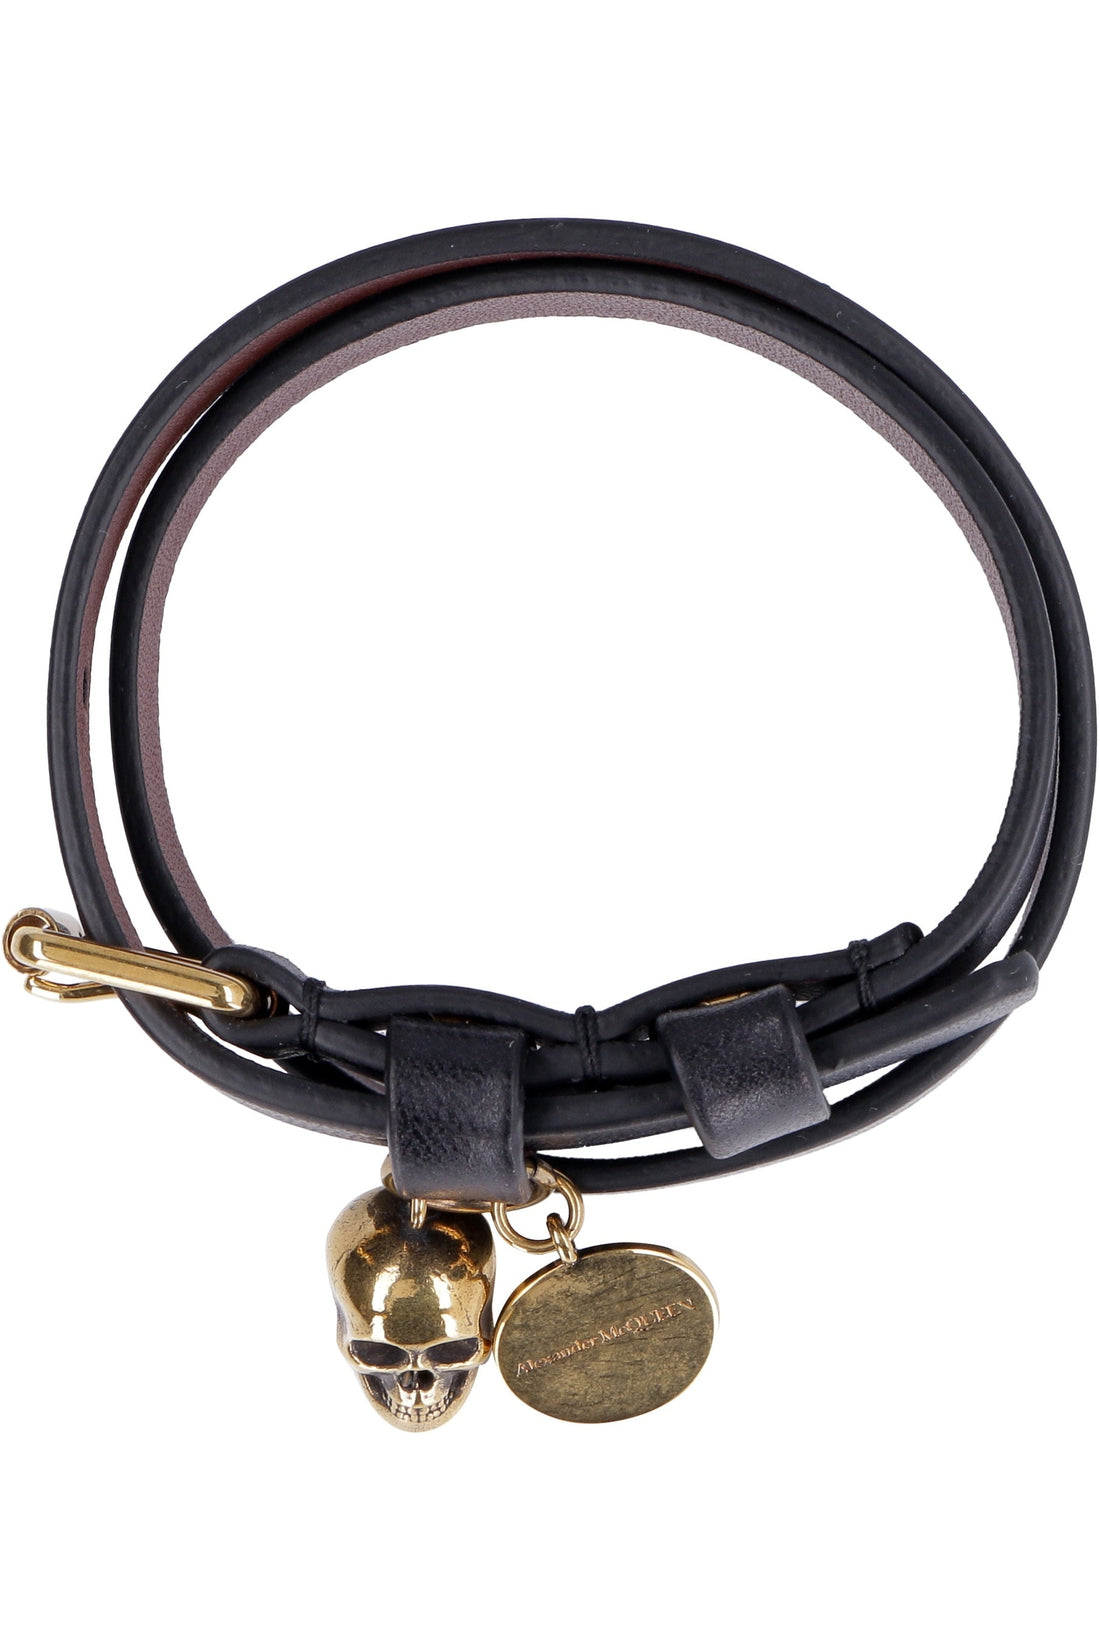 Alexander McQueen-OUTLET-SALE-Leather double-wrap bracelet with Skull charm-ARCHIVIST